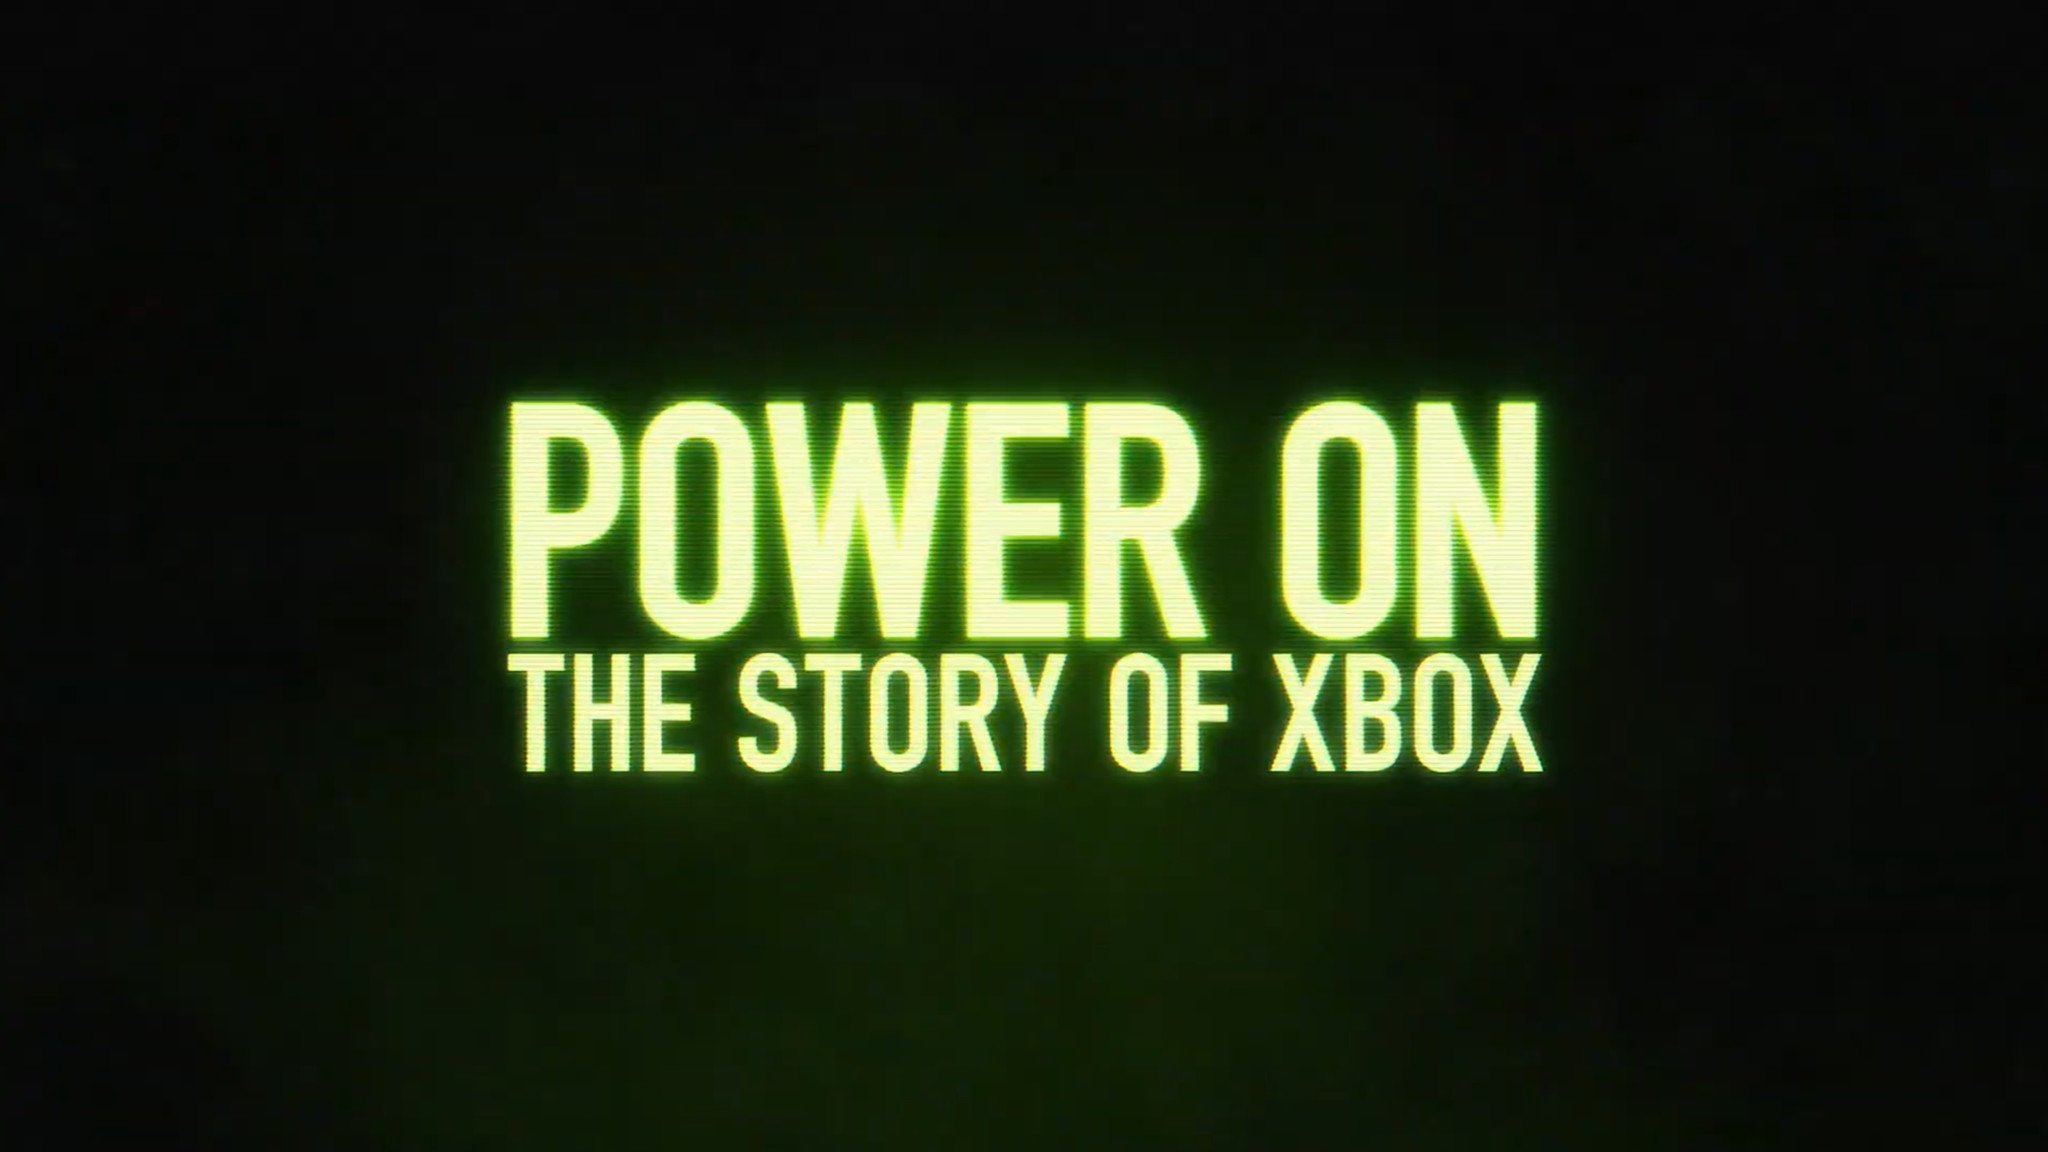 Xbox Power On Documentary Image